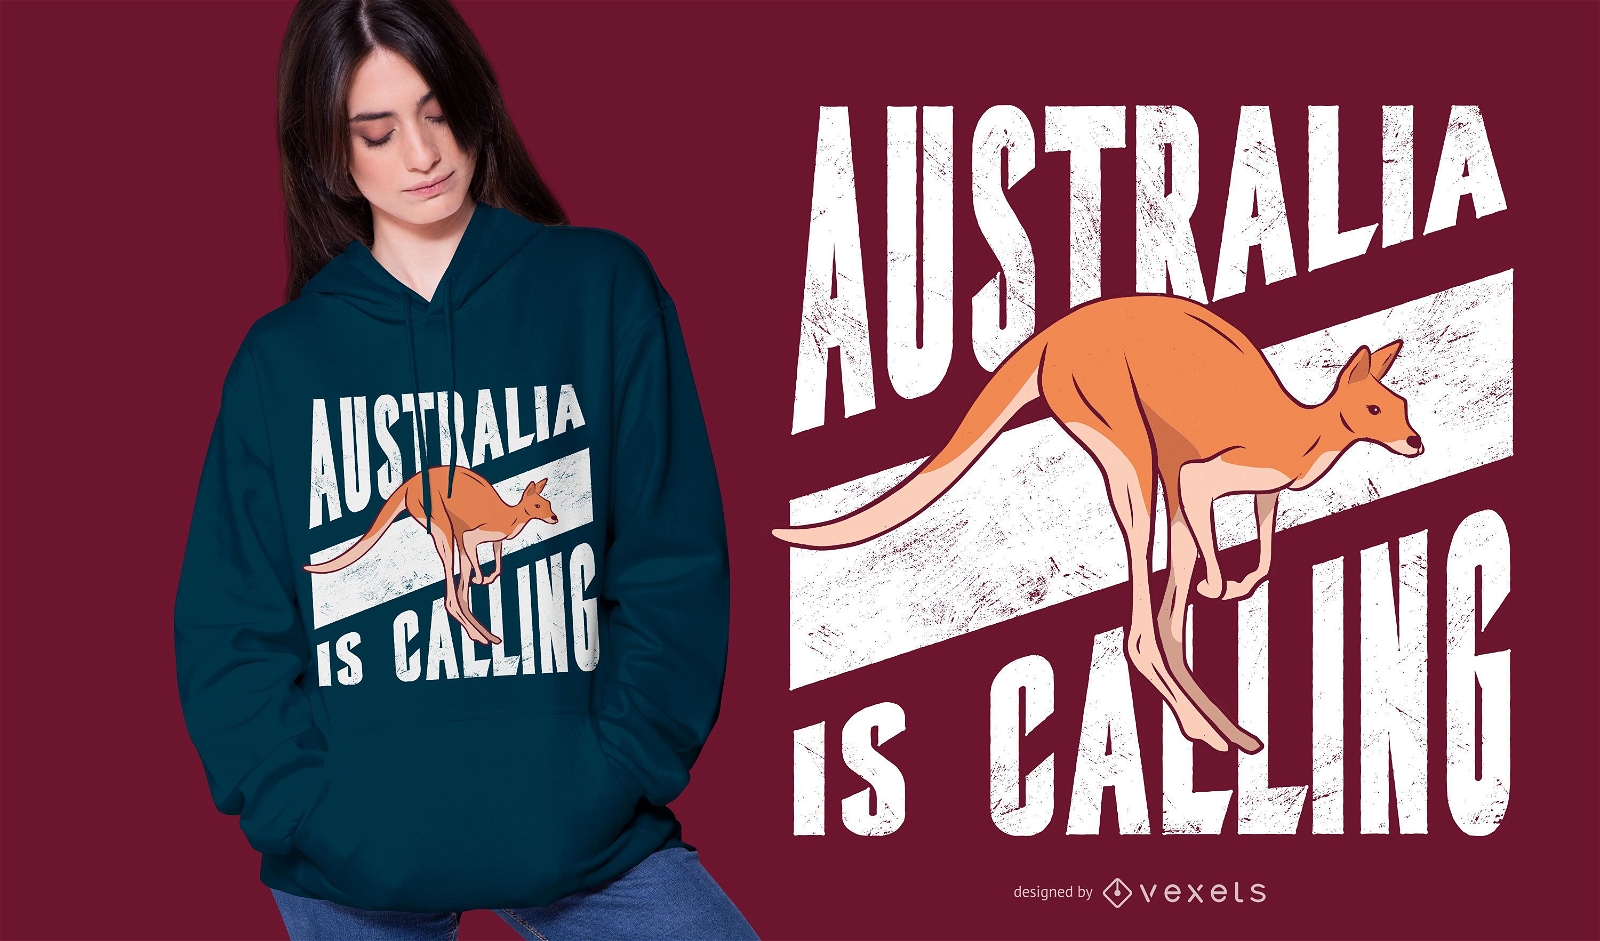 Australia is calling t-shirt design